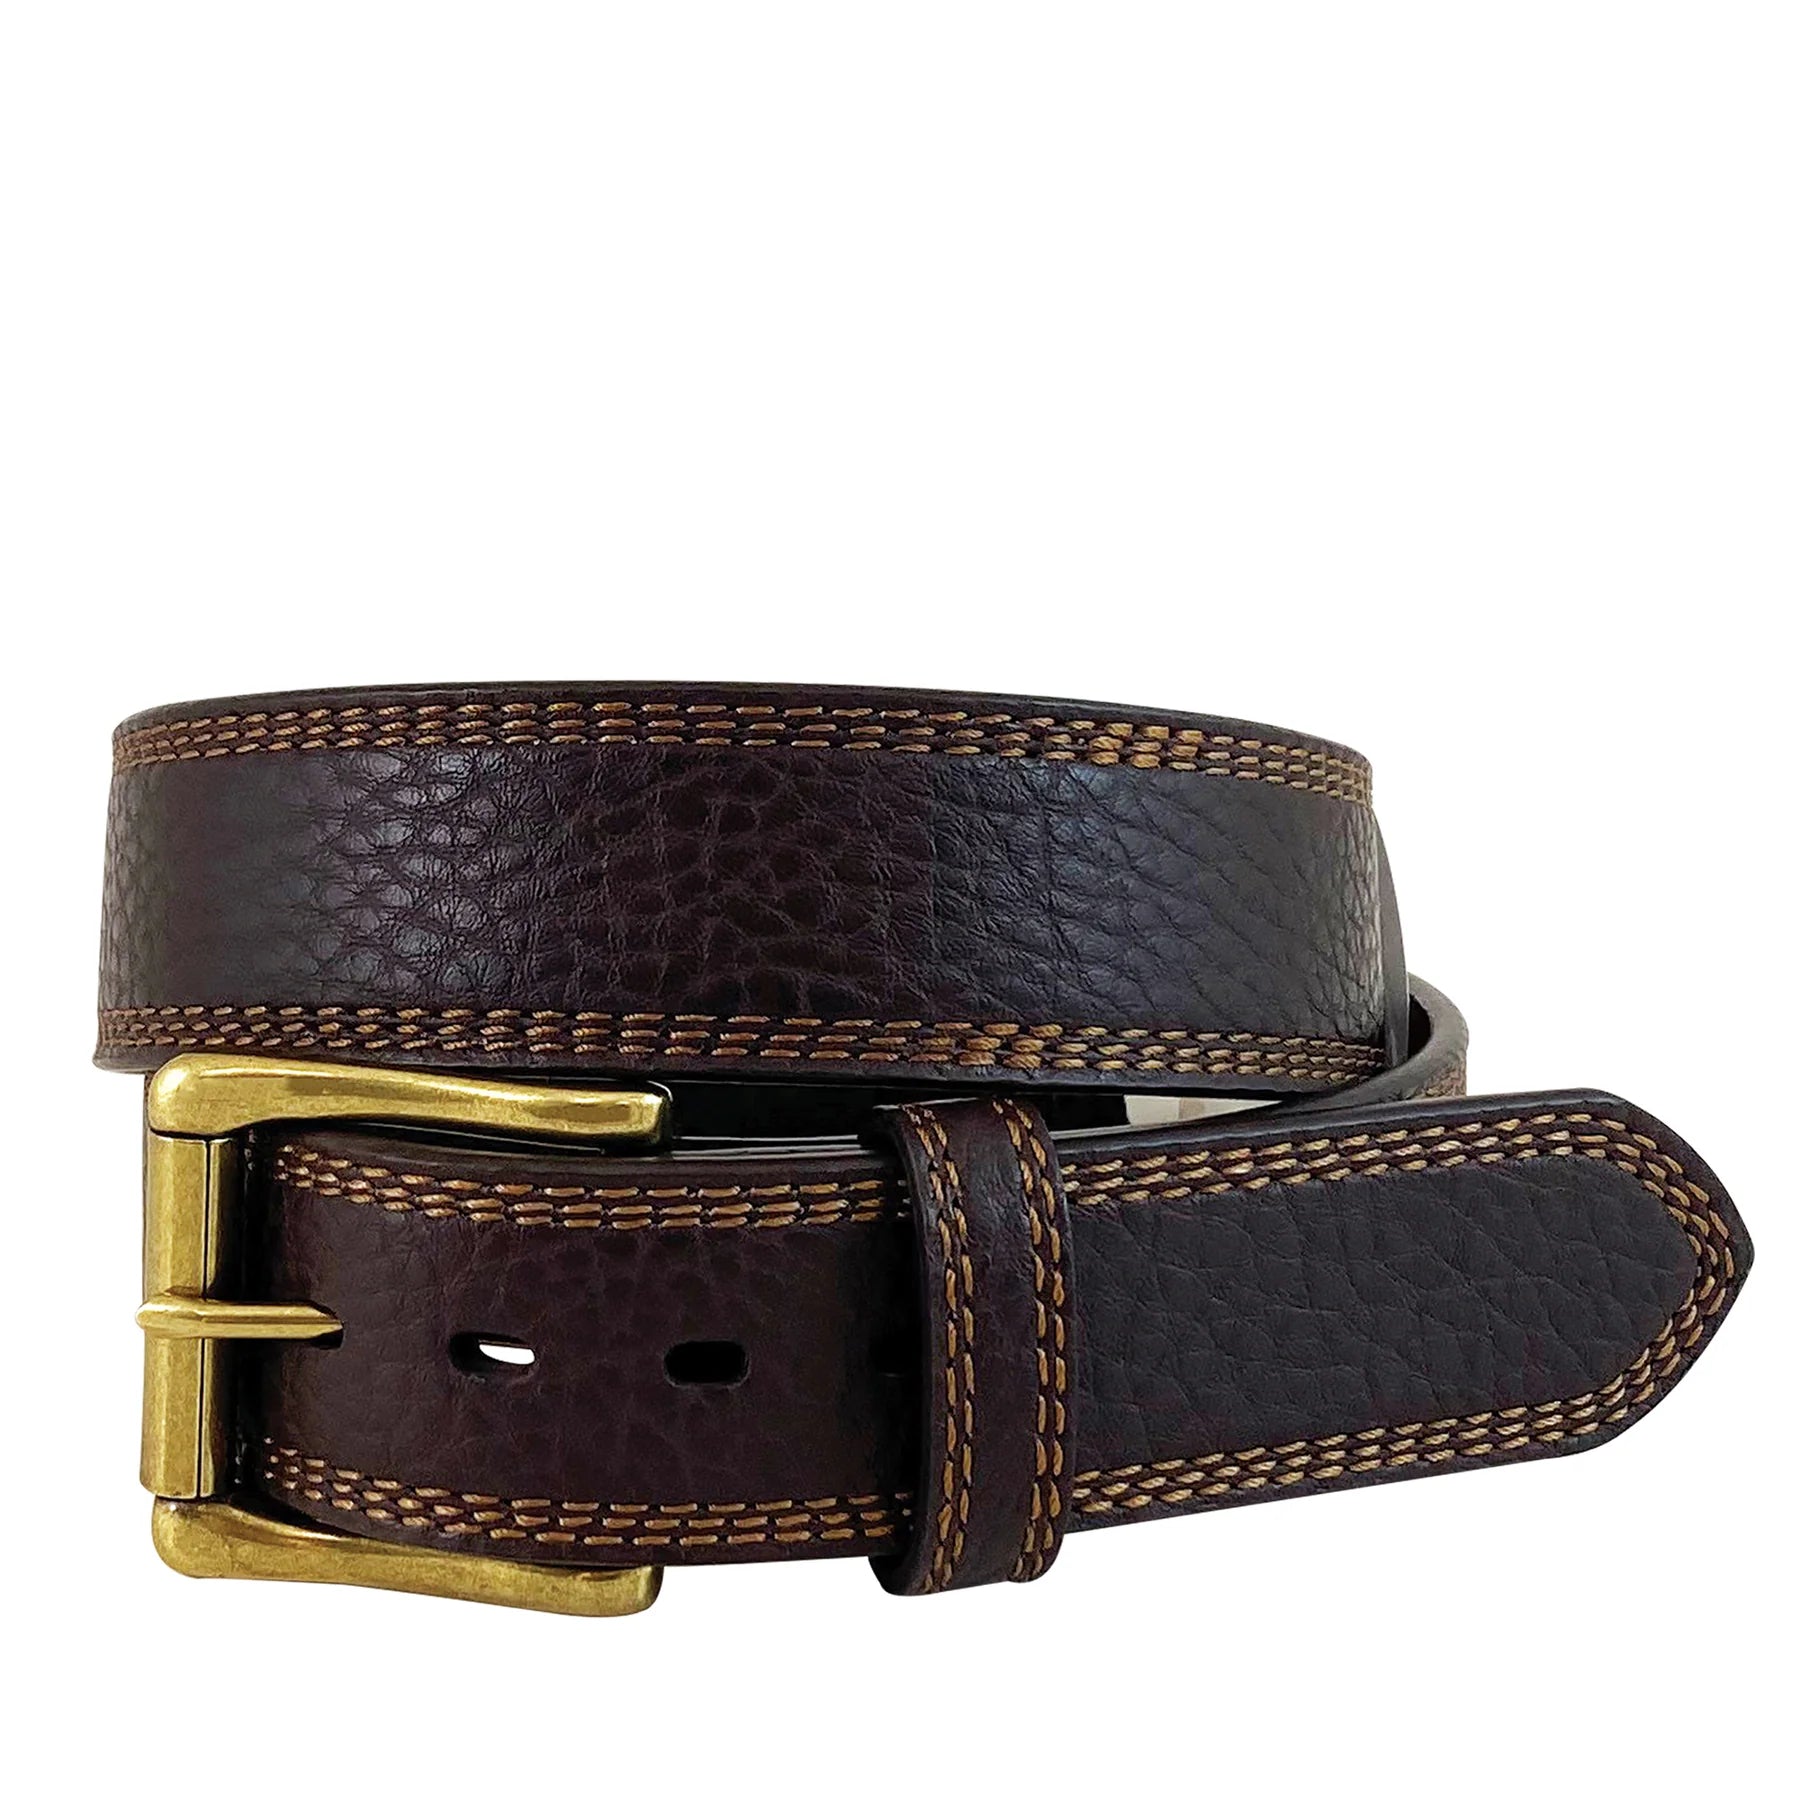 Roper Mns 1.5 Pebble Grain Genuine Leather Triple Stitched Belt Dark Brown